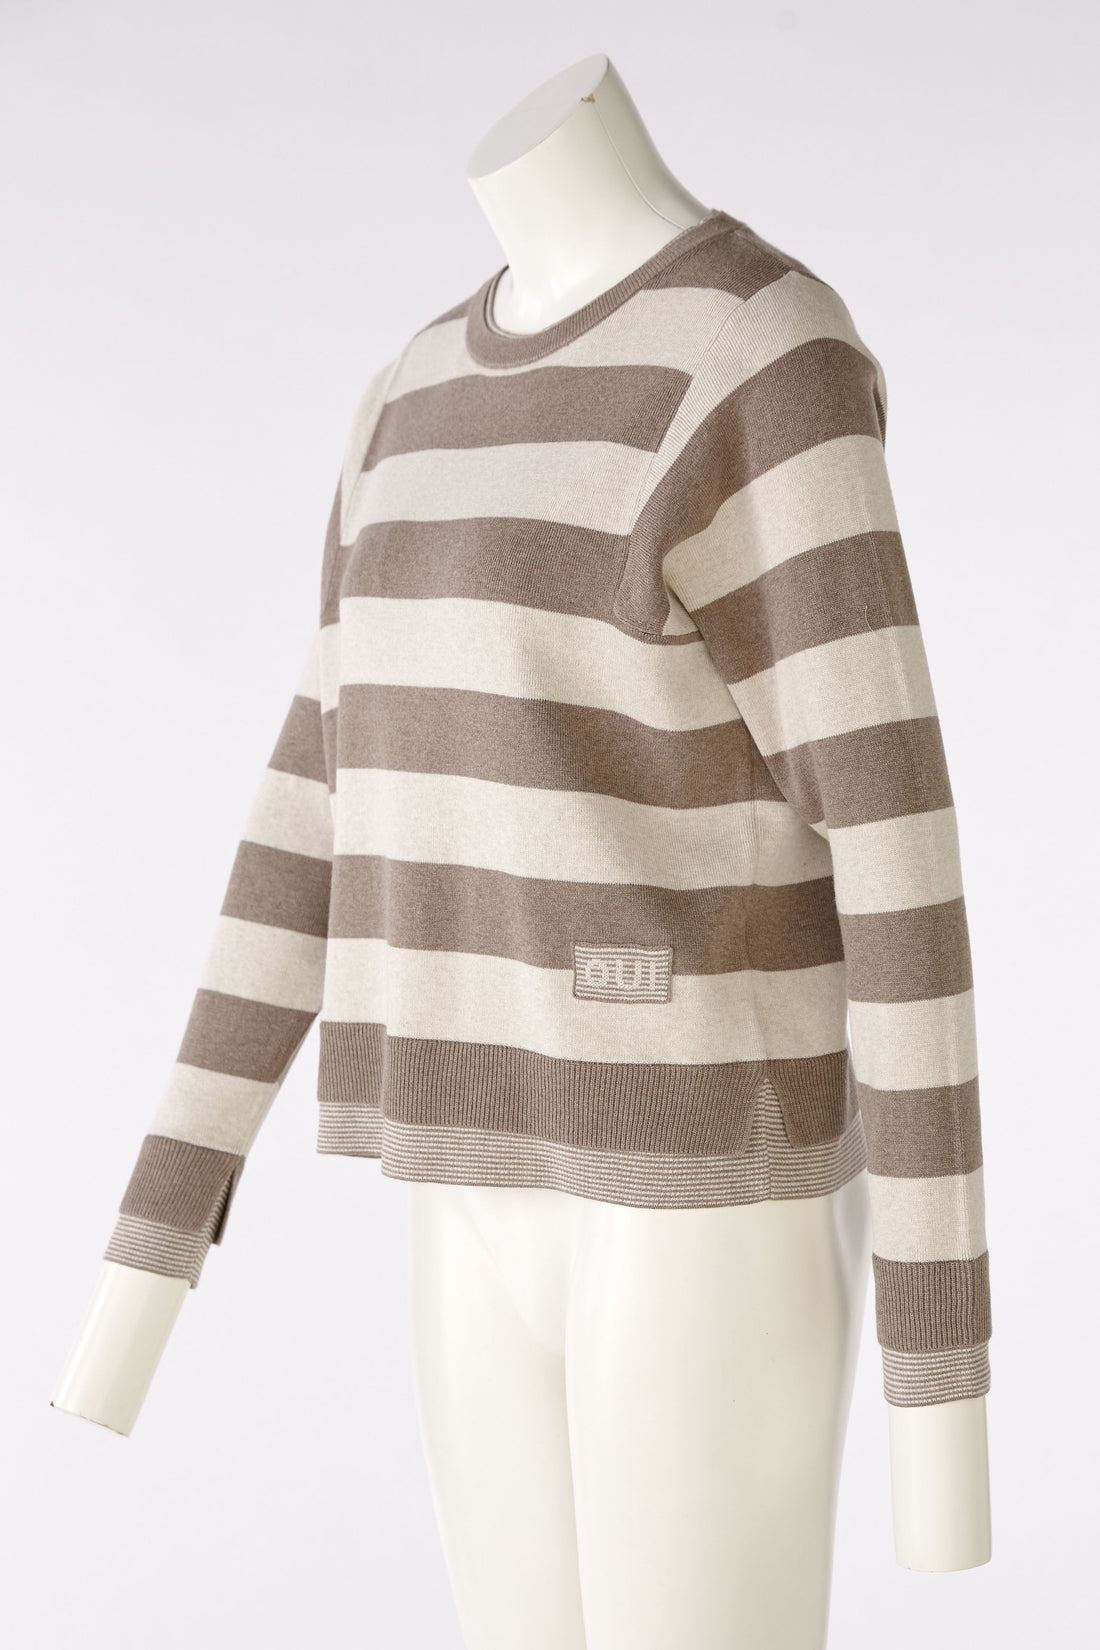 Oui - Light Brown &amp; Stone Cotton Striped Knit